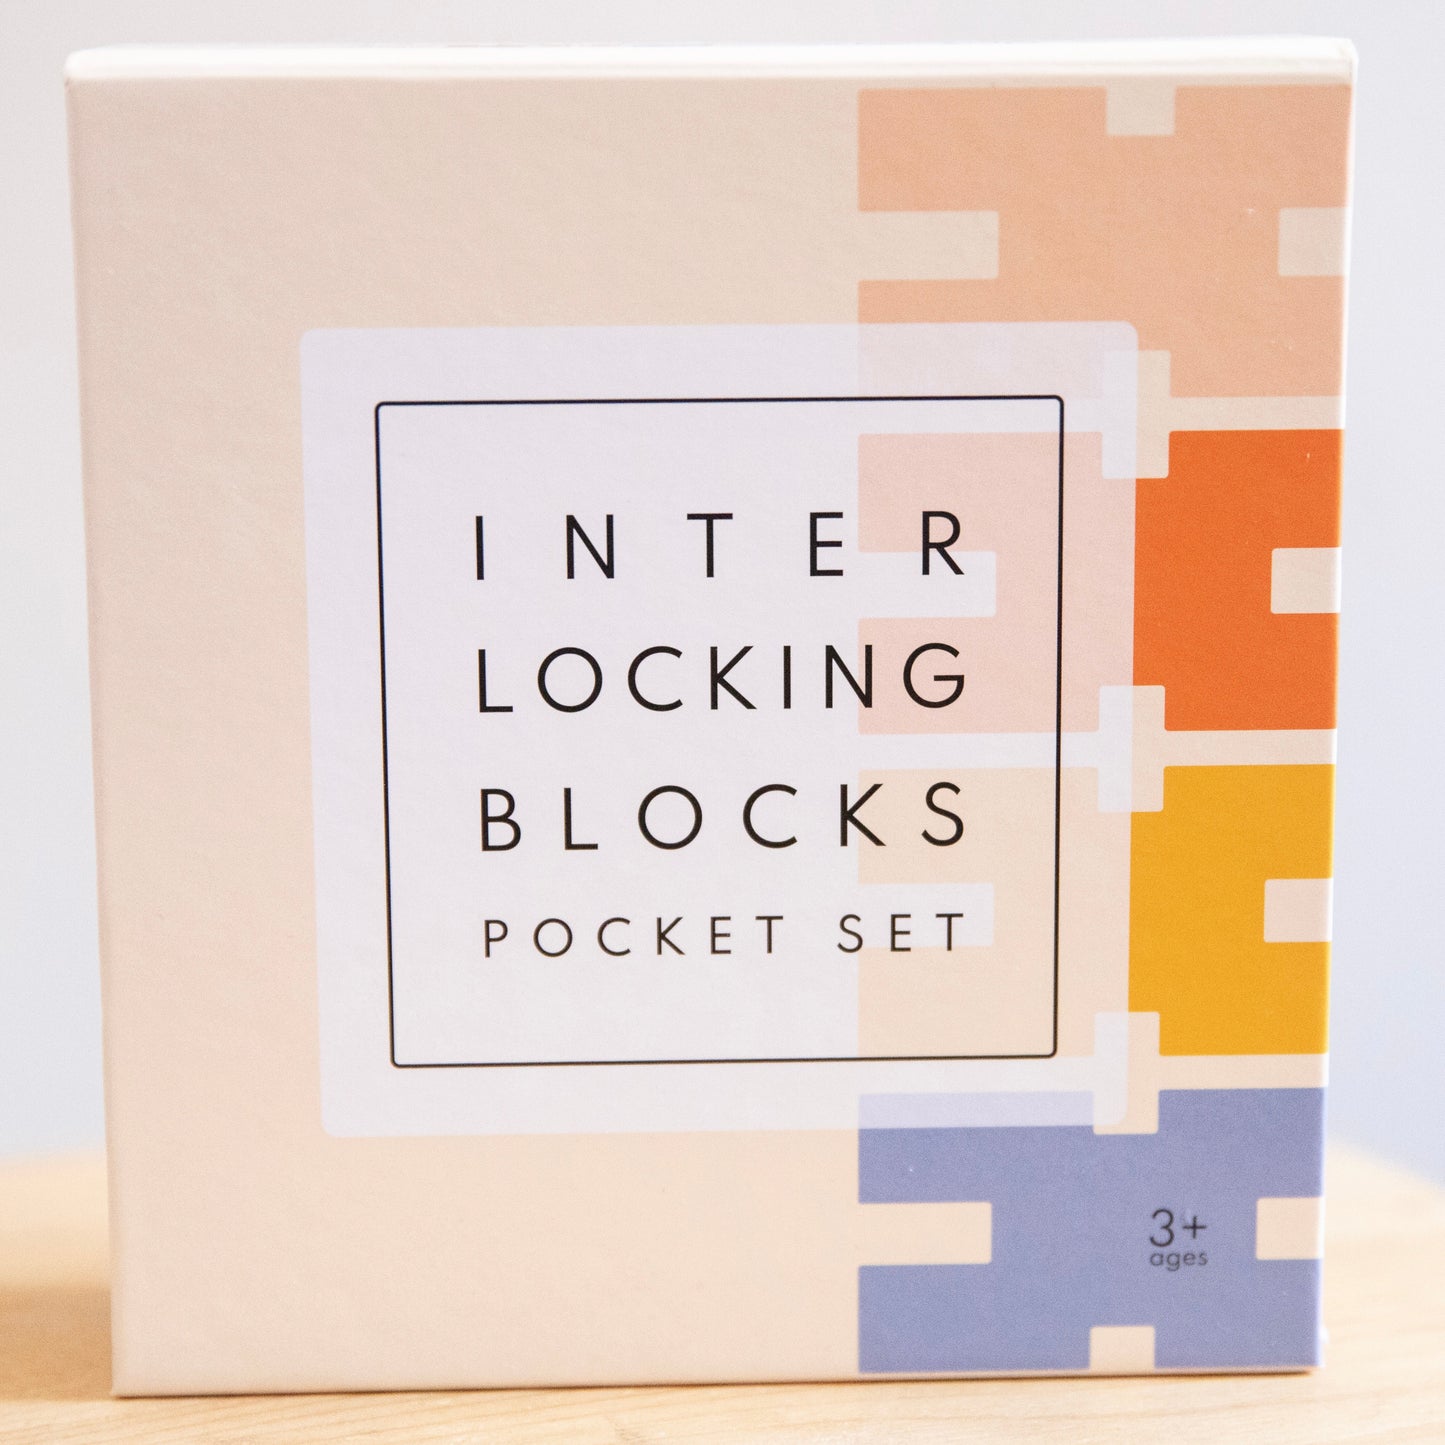 interlocking blocks - pocket set